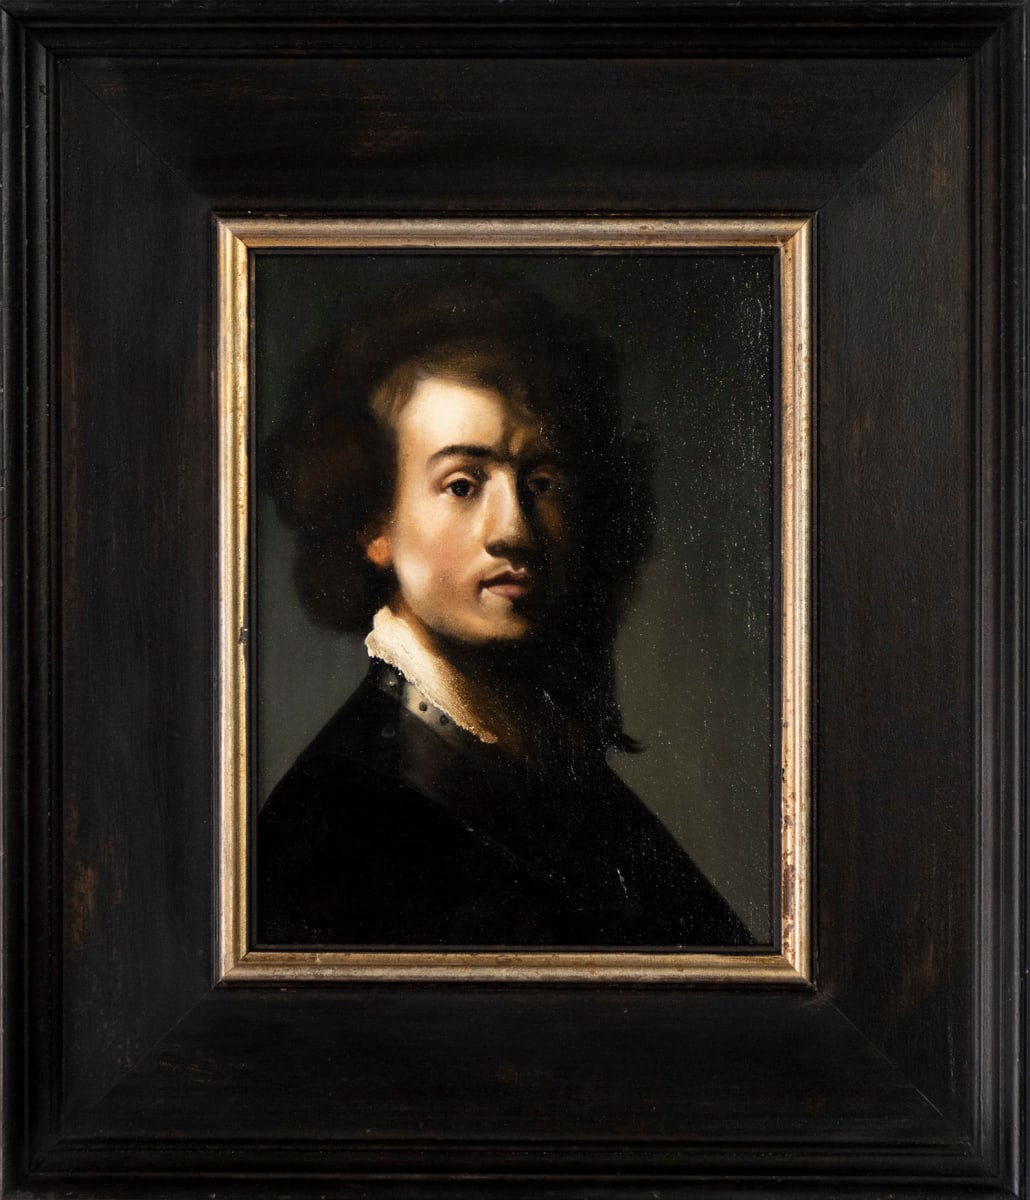 Self-portrait after Rembrandt Harmenszoon Van Rijn by André Romijn  Image: Self-portrait after Rembrandt Harmenszoon Van Rijn